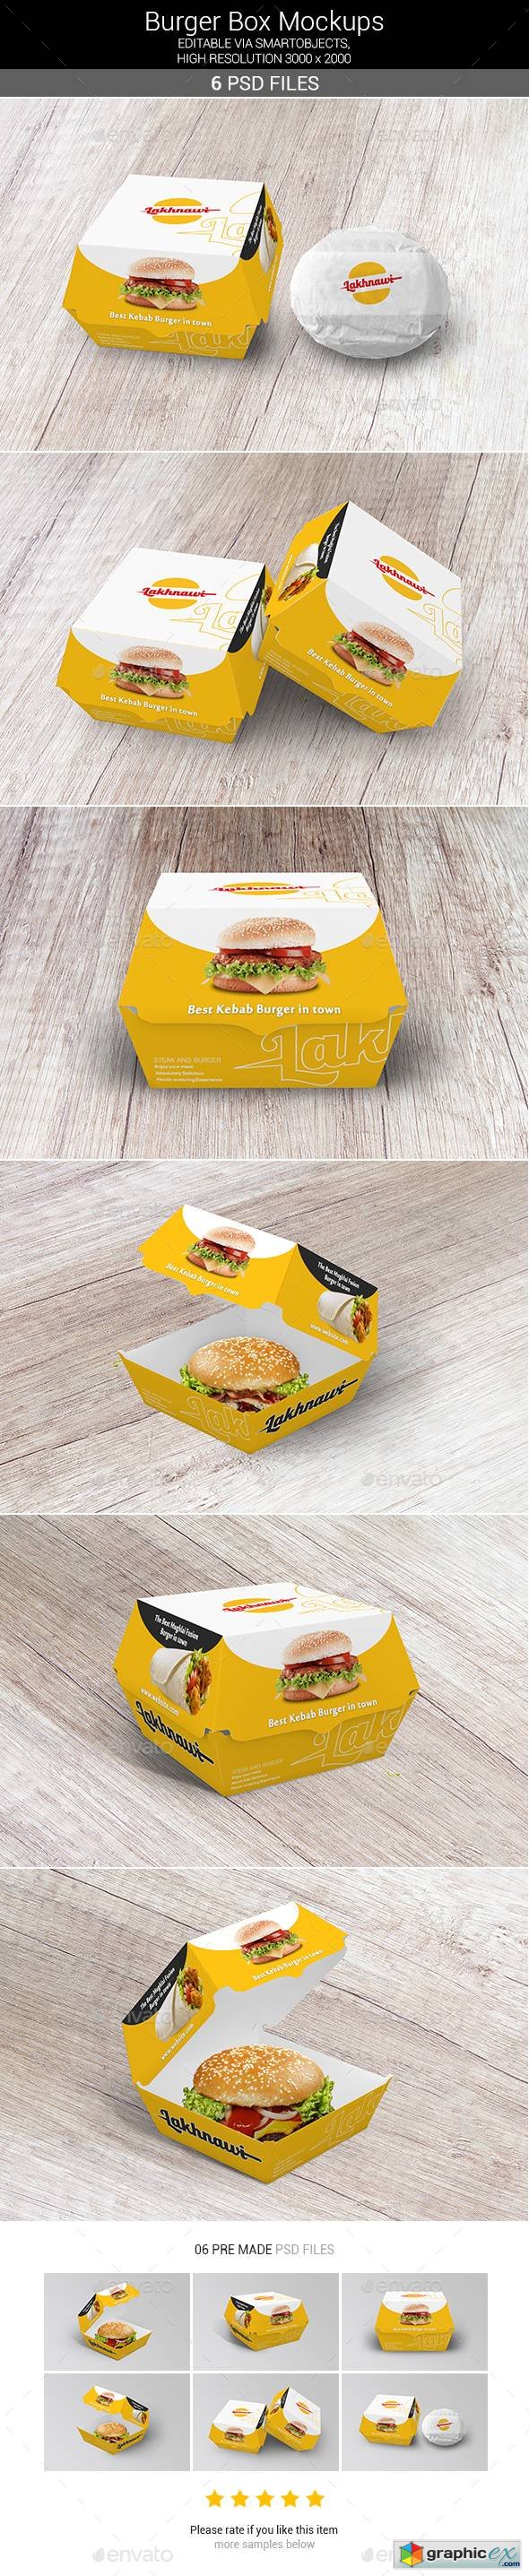 Download Burger Box Mockups » Free Download Vector Stock Image ...